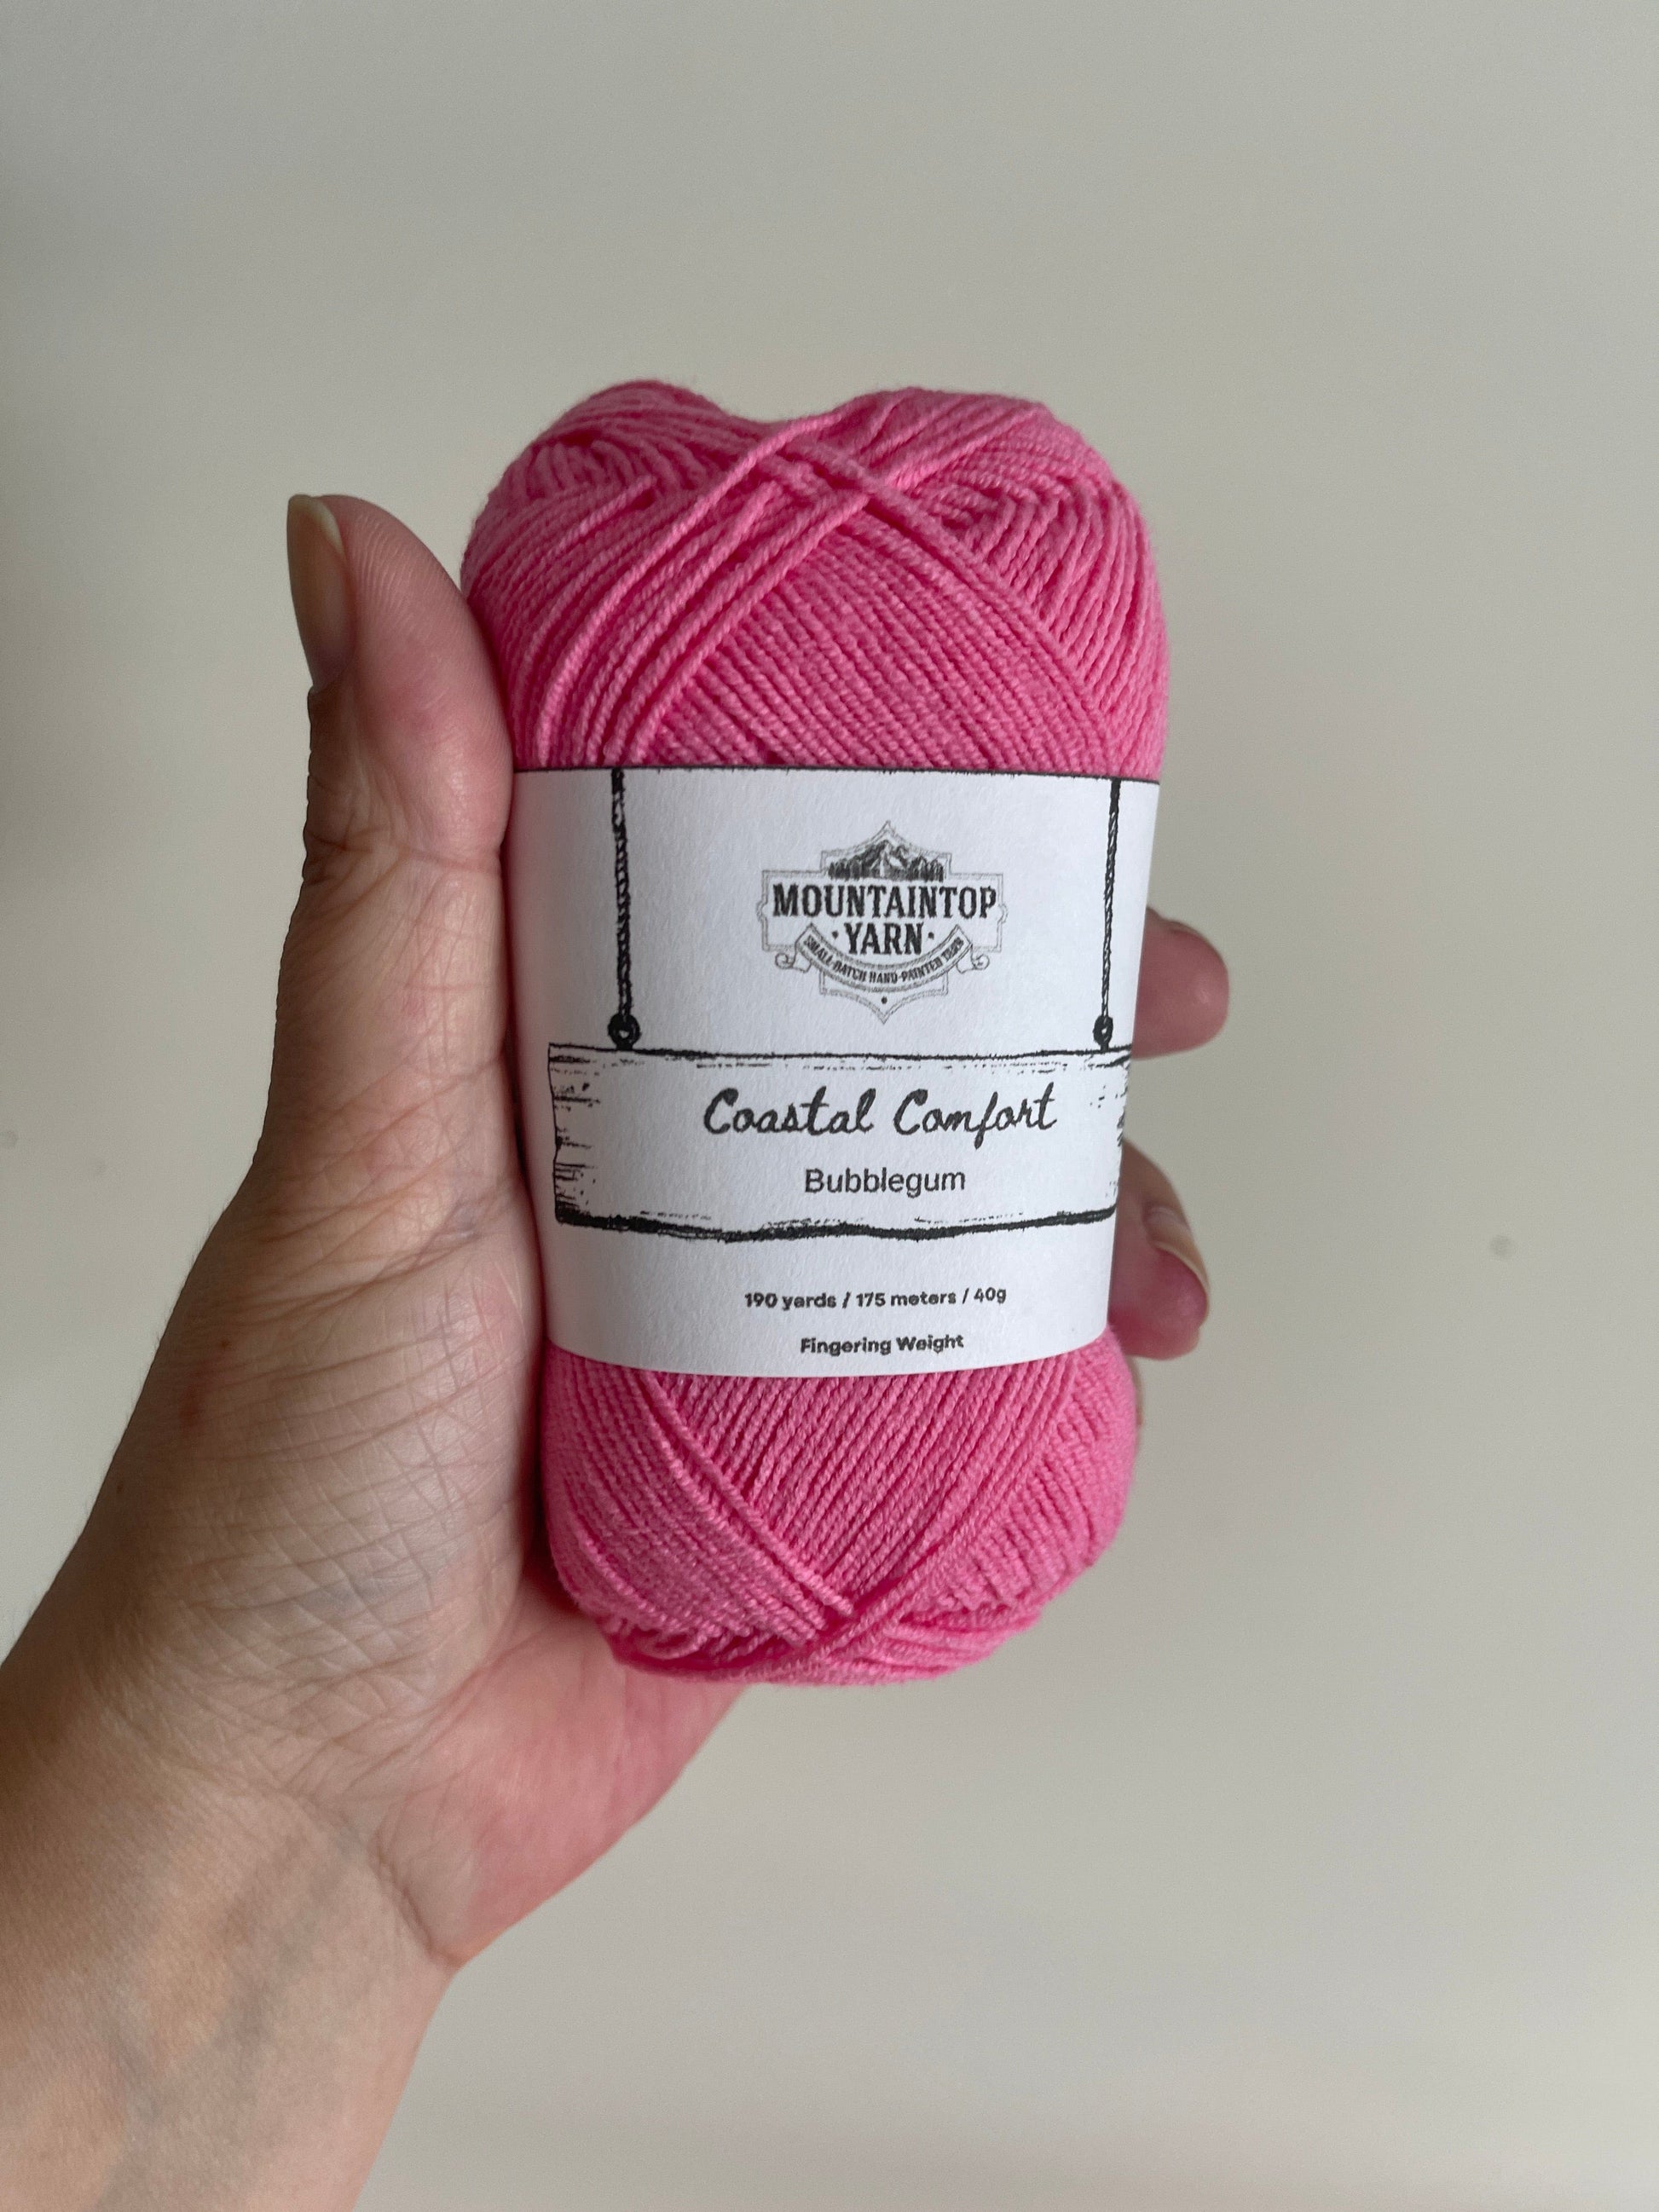 Mountaintop Yarn Bubblegum Coastal Comfort - Cotton and Acrylic Blend Yarn Yarn